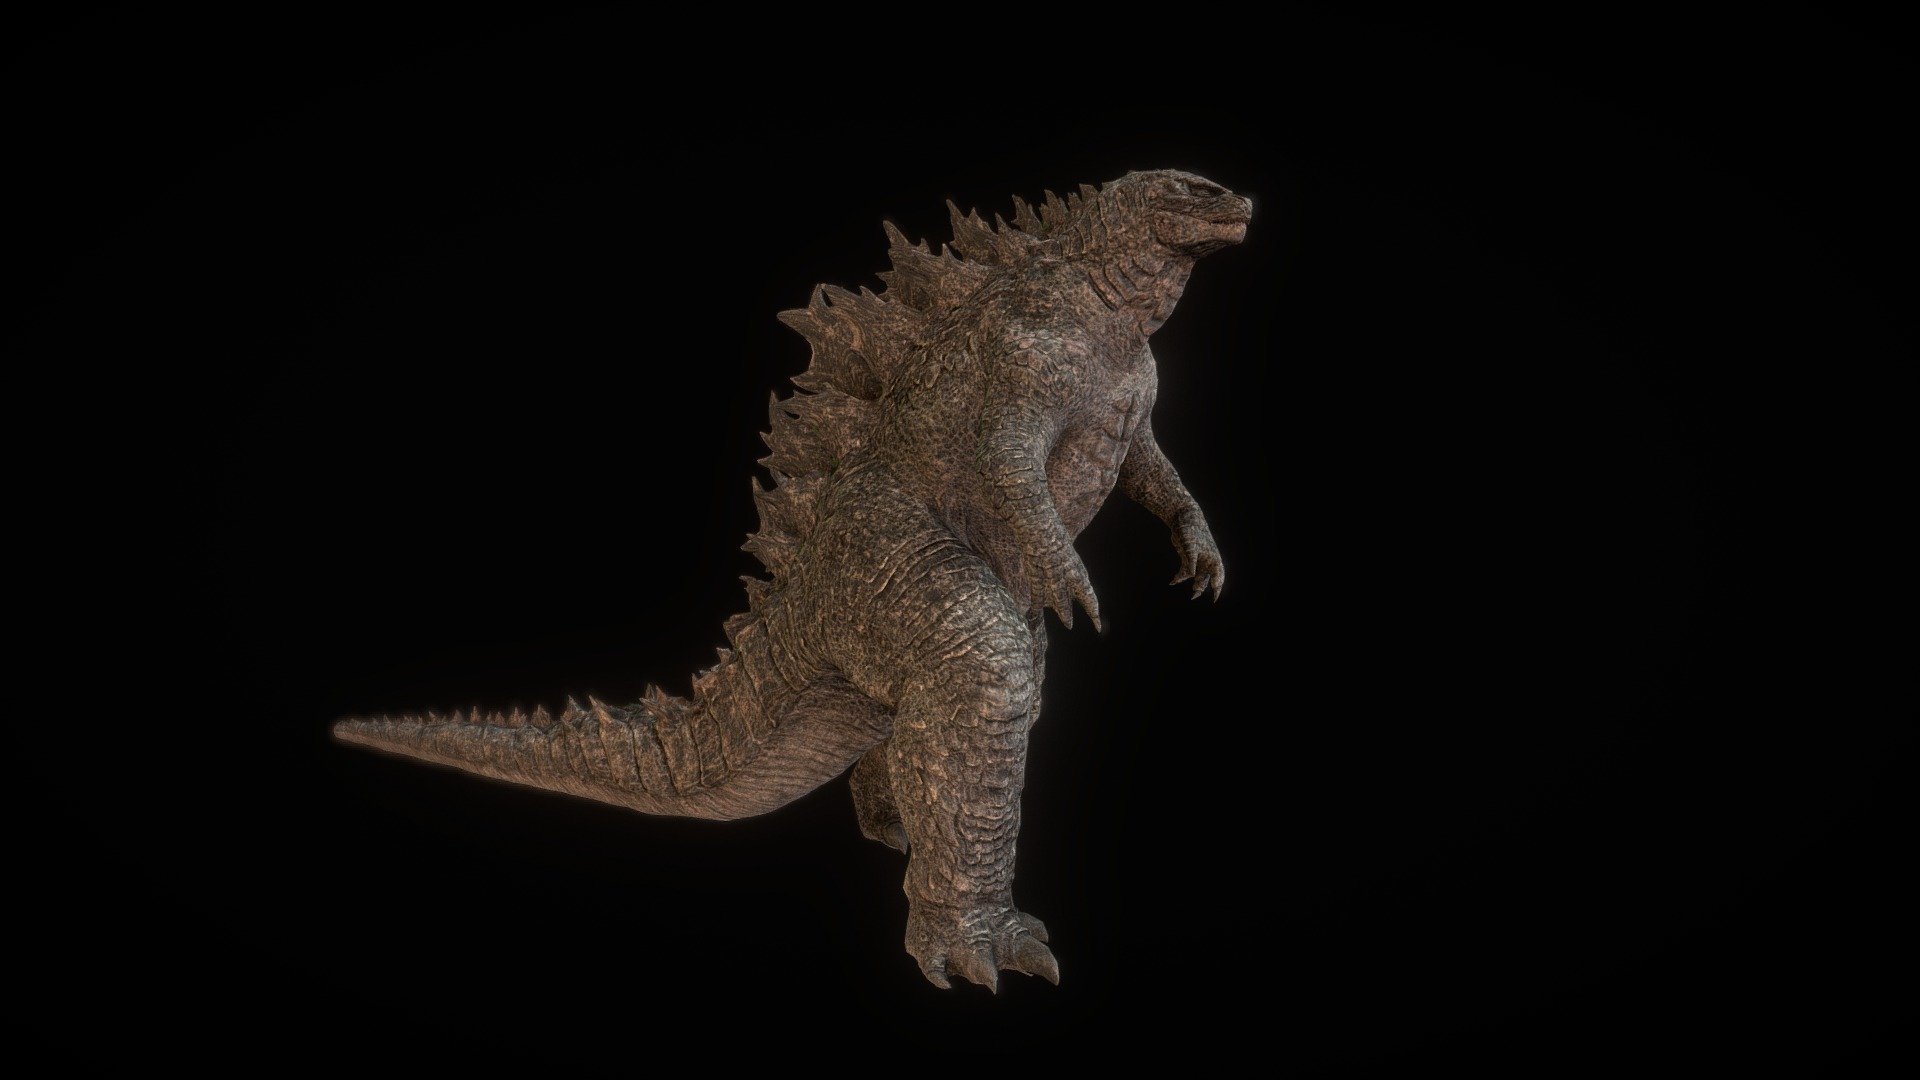 3D model of godzilla giant monster dinosaur. Available 3d model format: .glb(GL Breath) Texture format: tga, png - Godzilla - Download Free 3D model by savounited 3d model